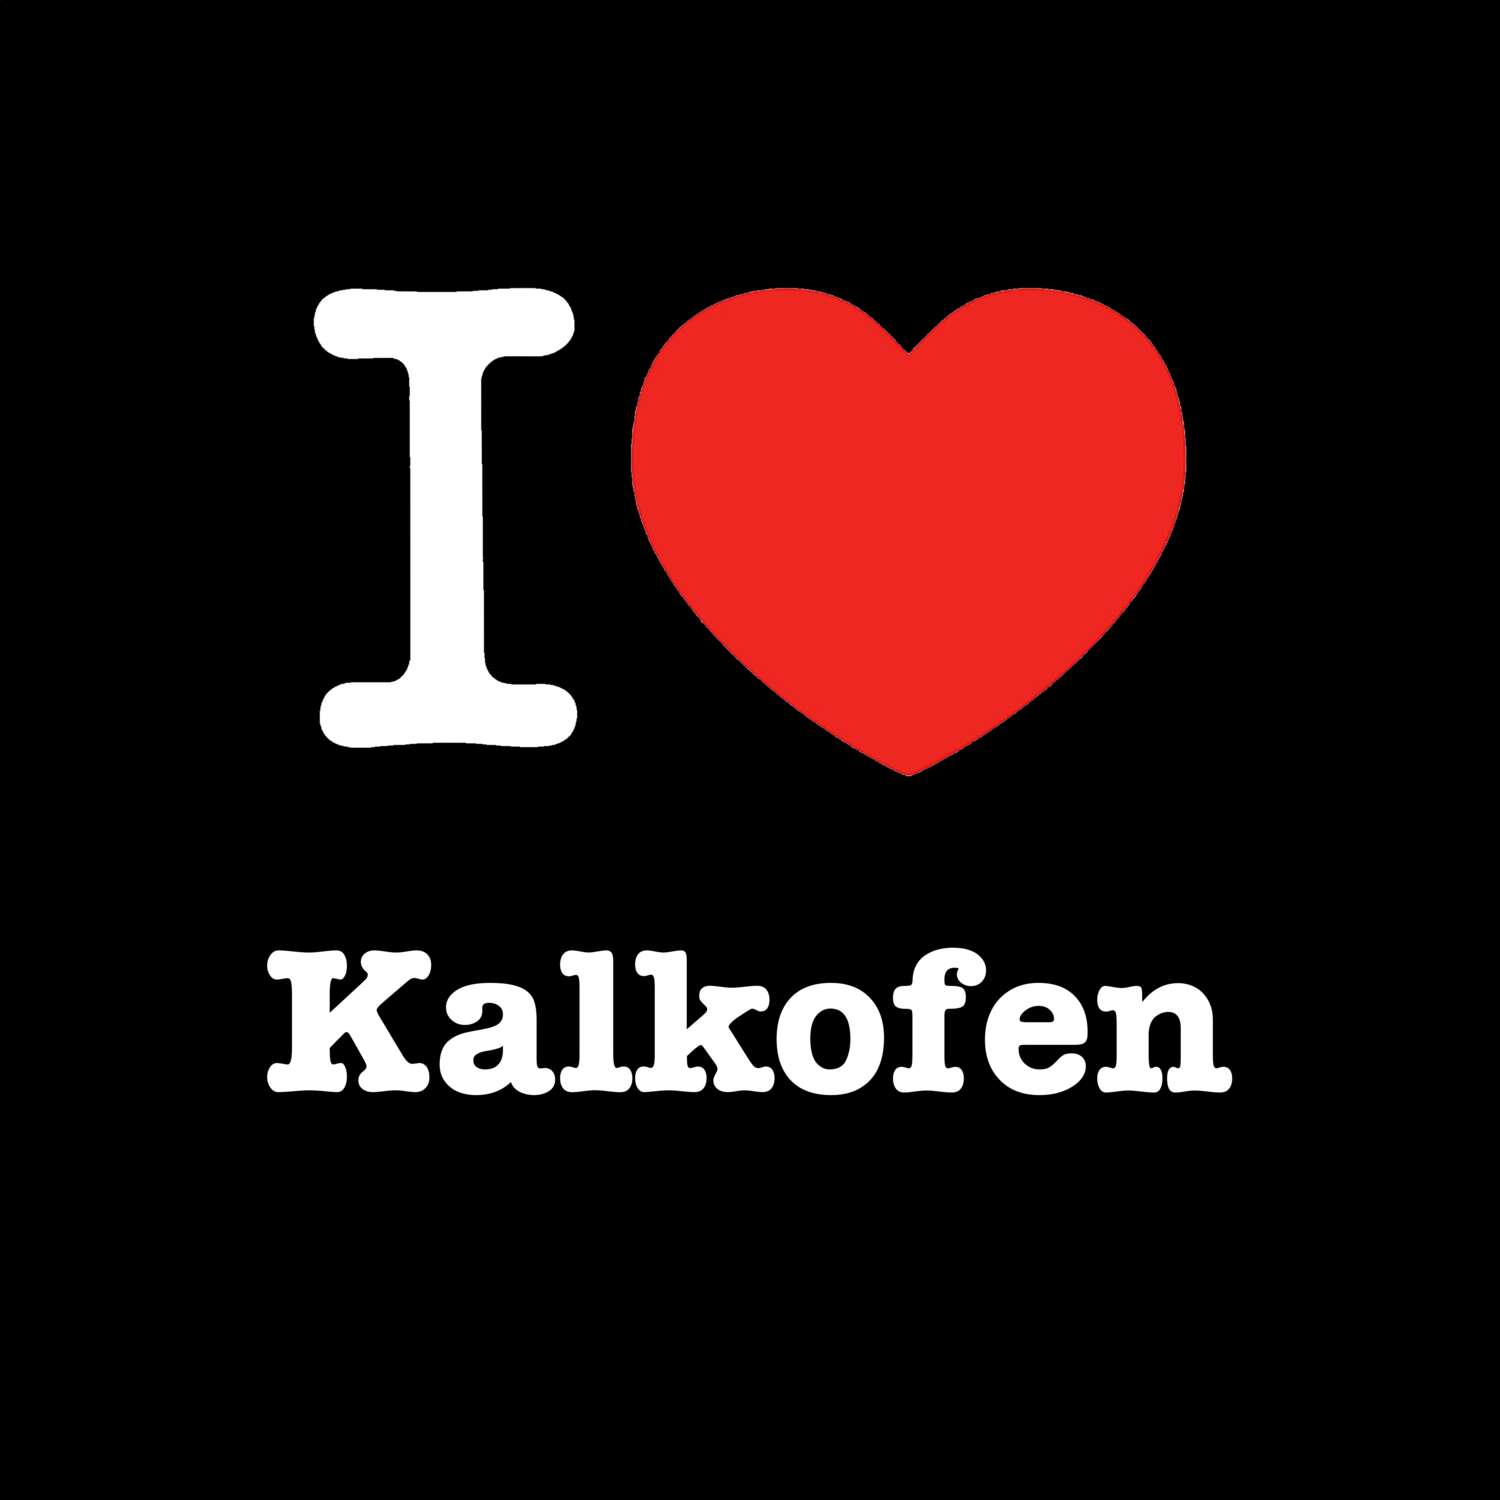 Kalkofen T-Shirt »I love«